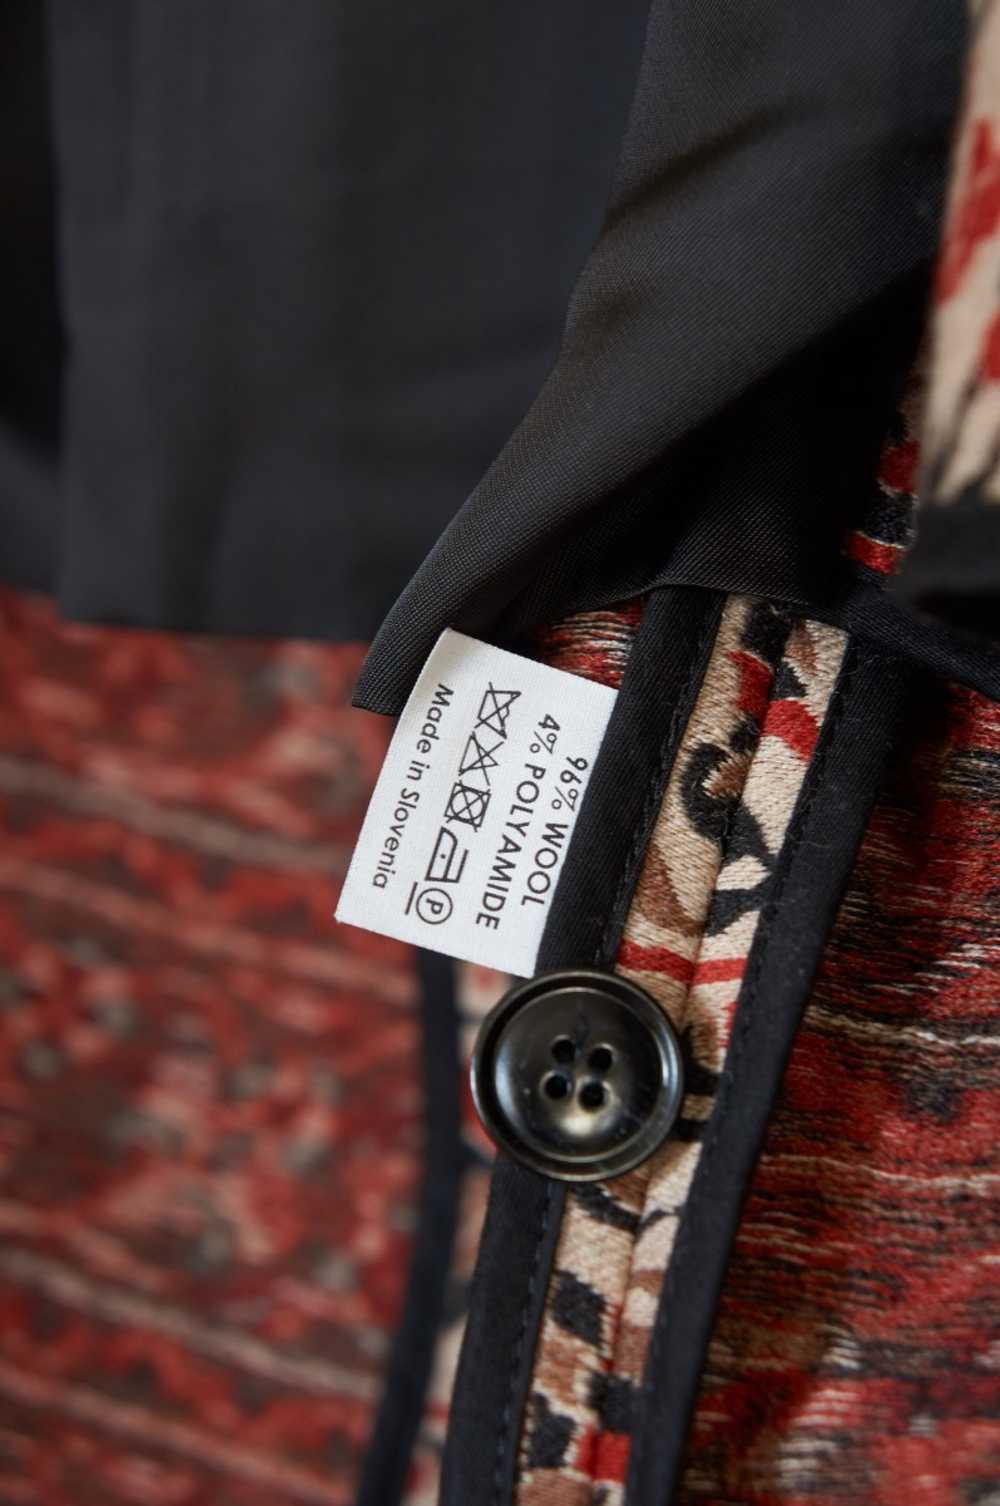 Dries Van Noten AW13 heavy wool floral jacket - image 6